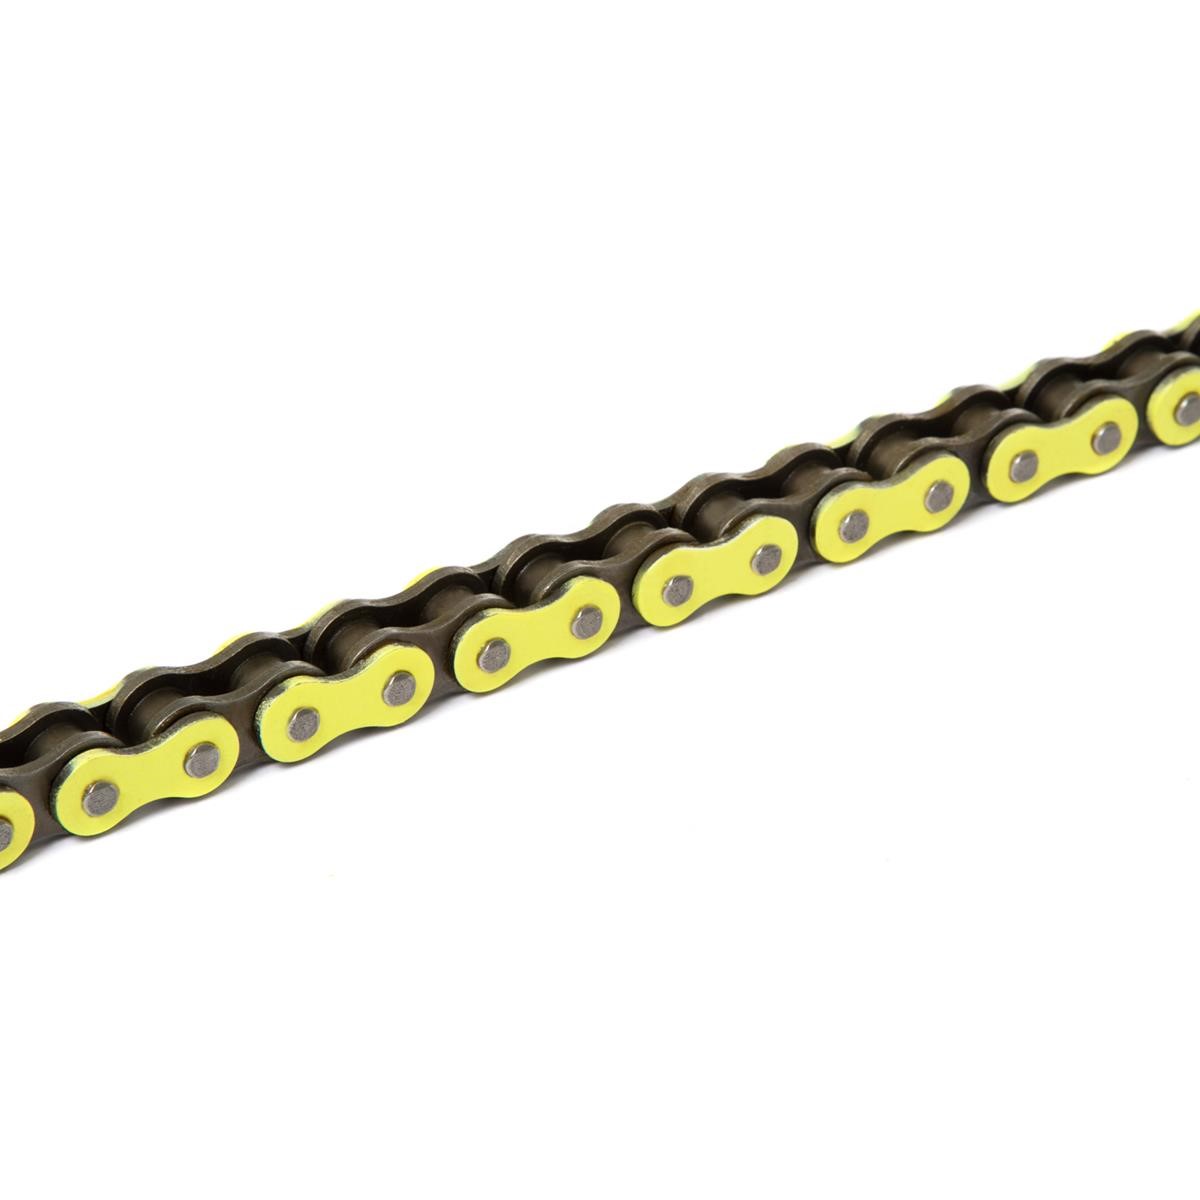 YCF Chain  Yellow - 420 pitch, 116 rolls